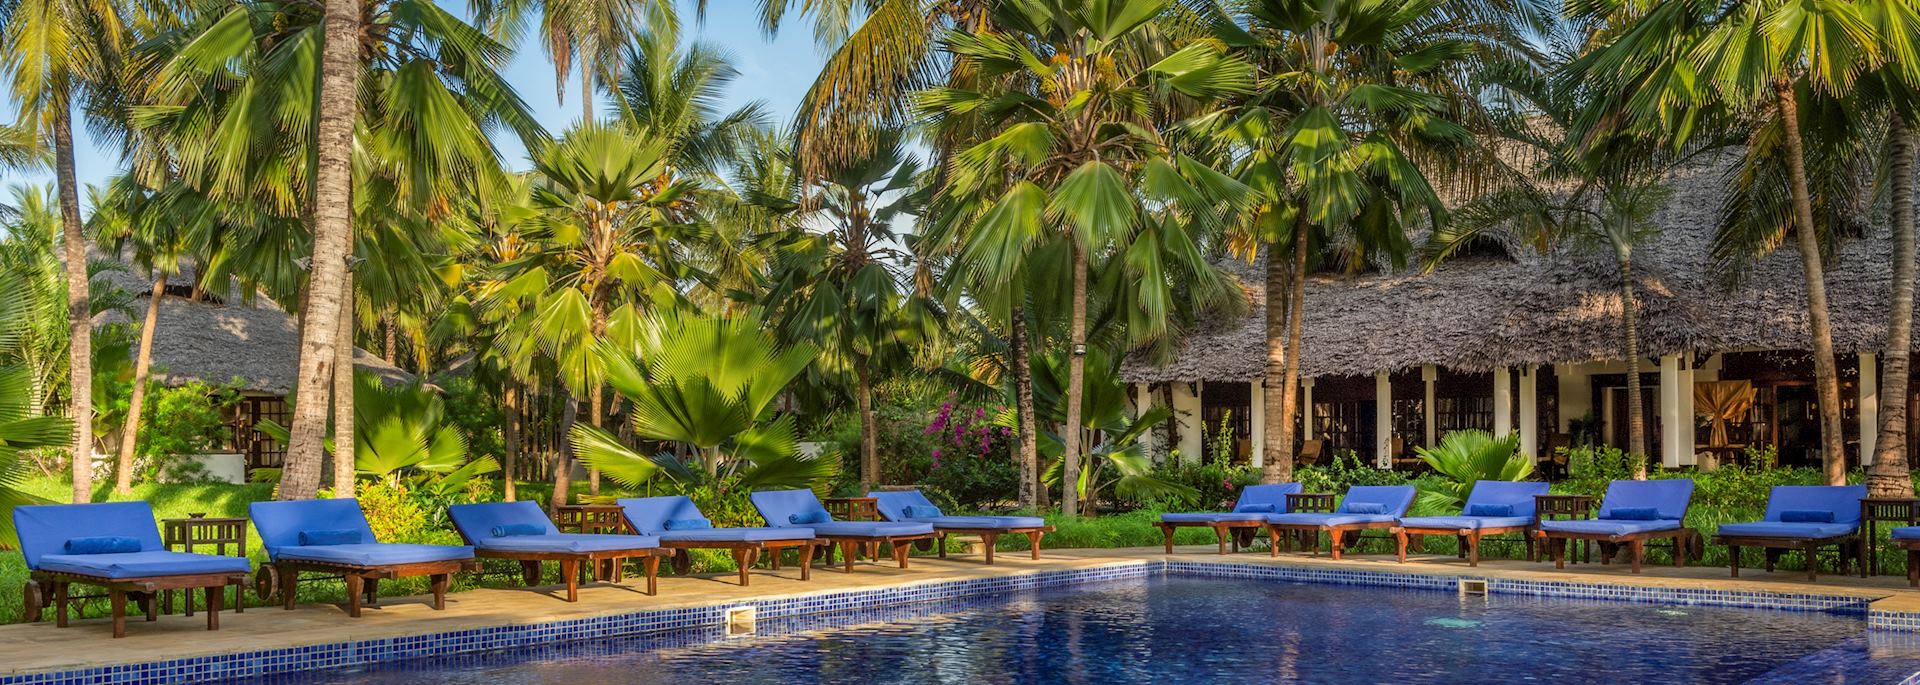 Swimming pool at The Palms, Zanzibar Island